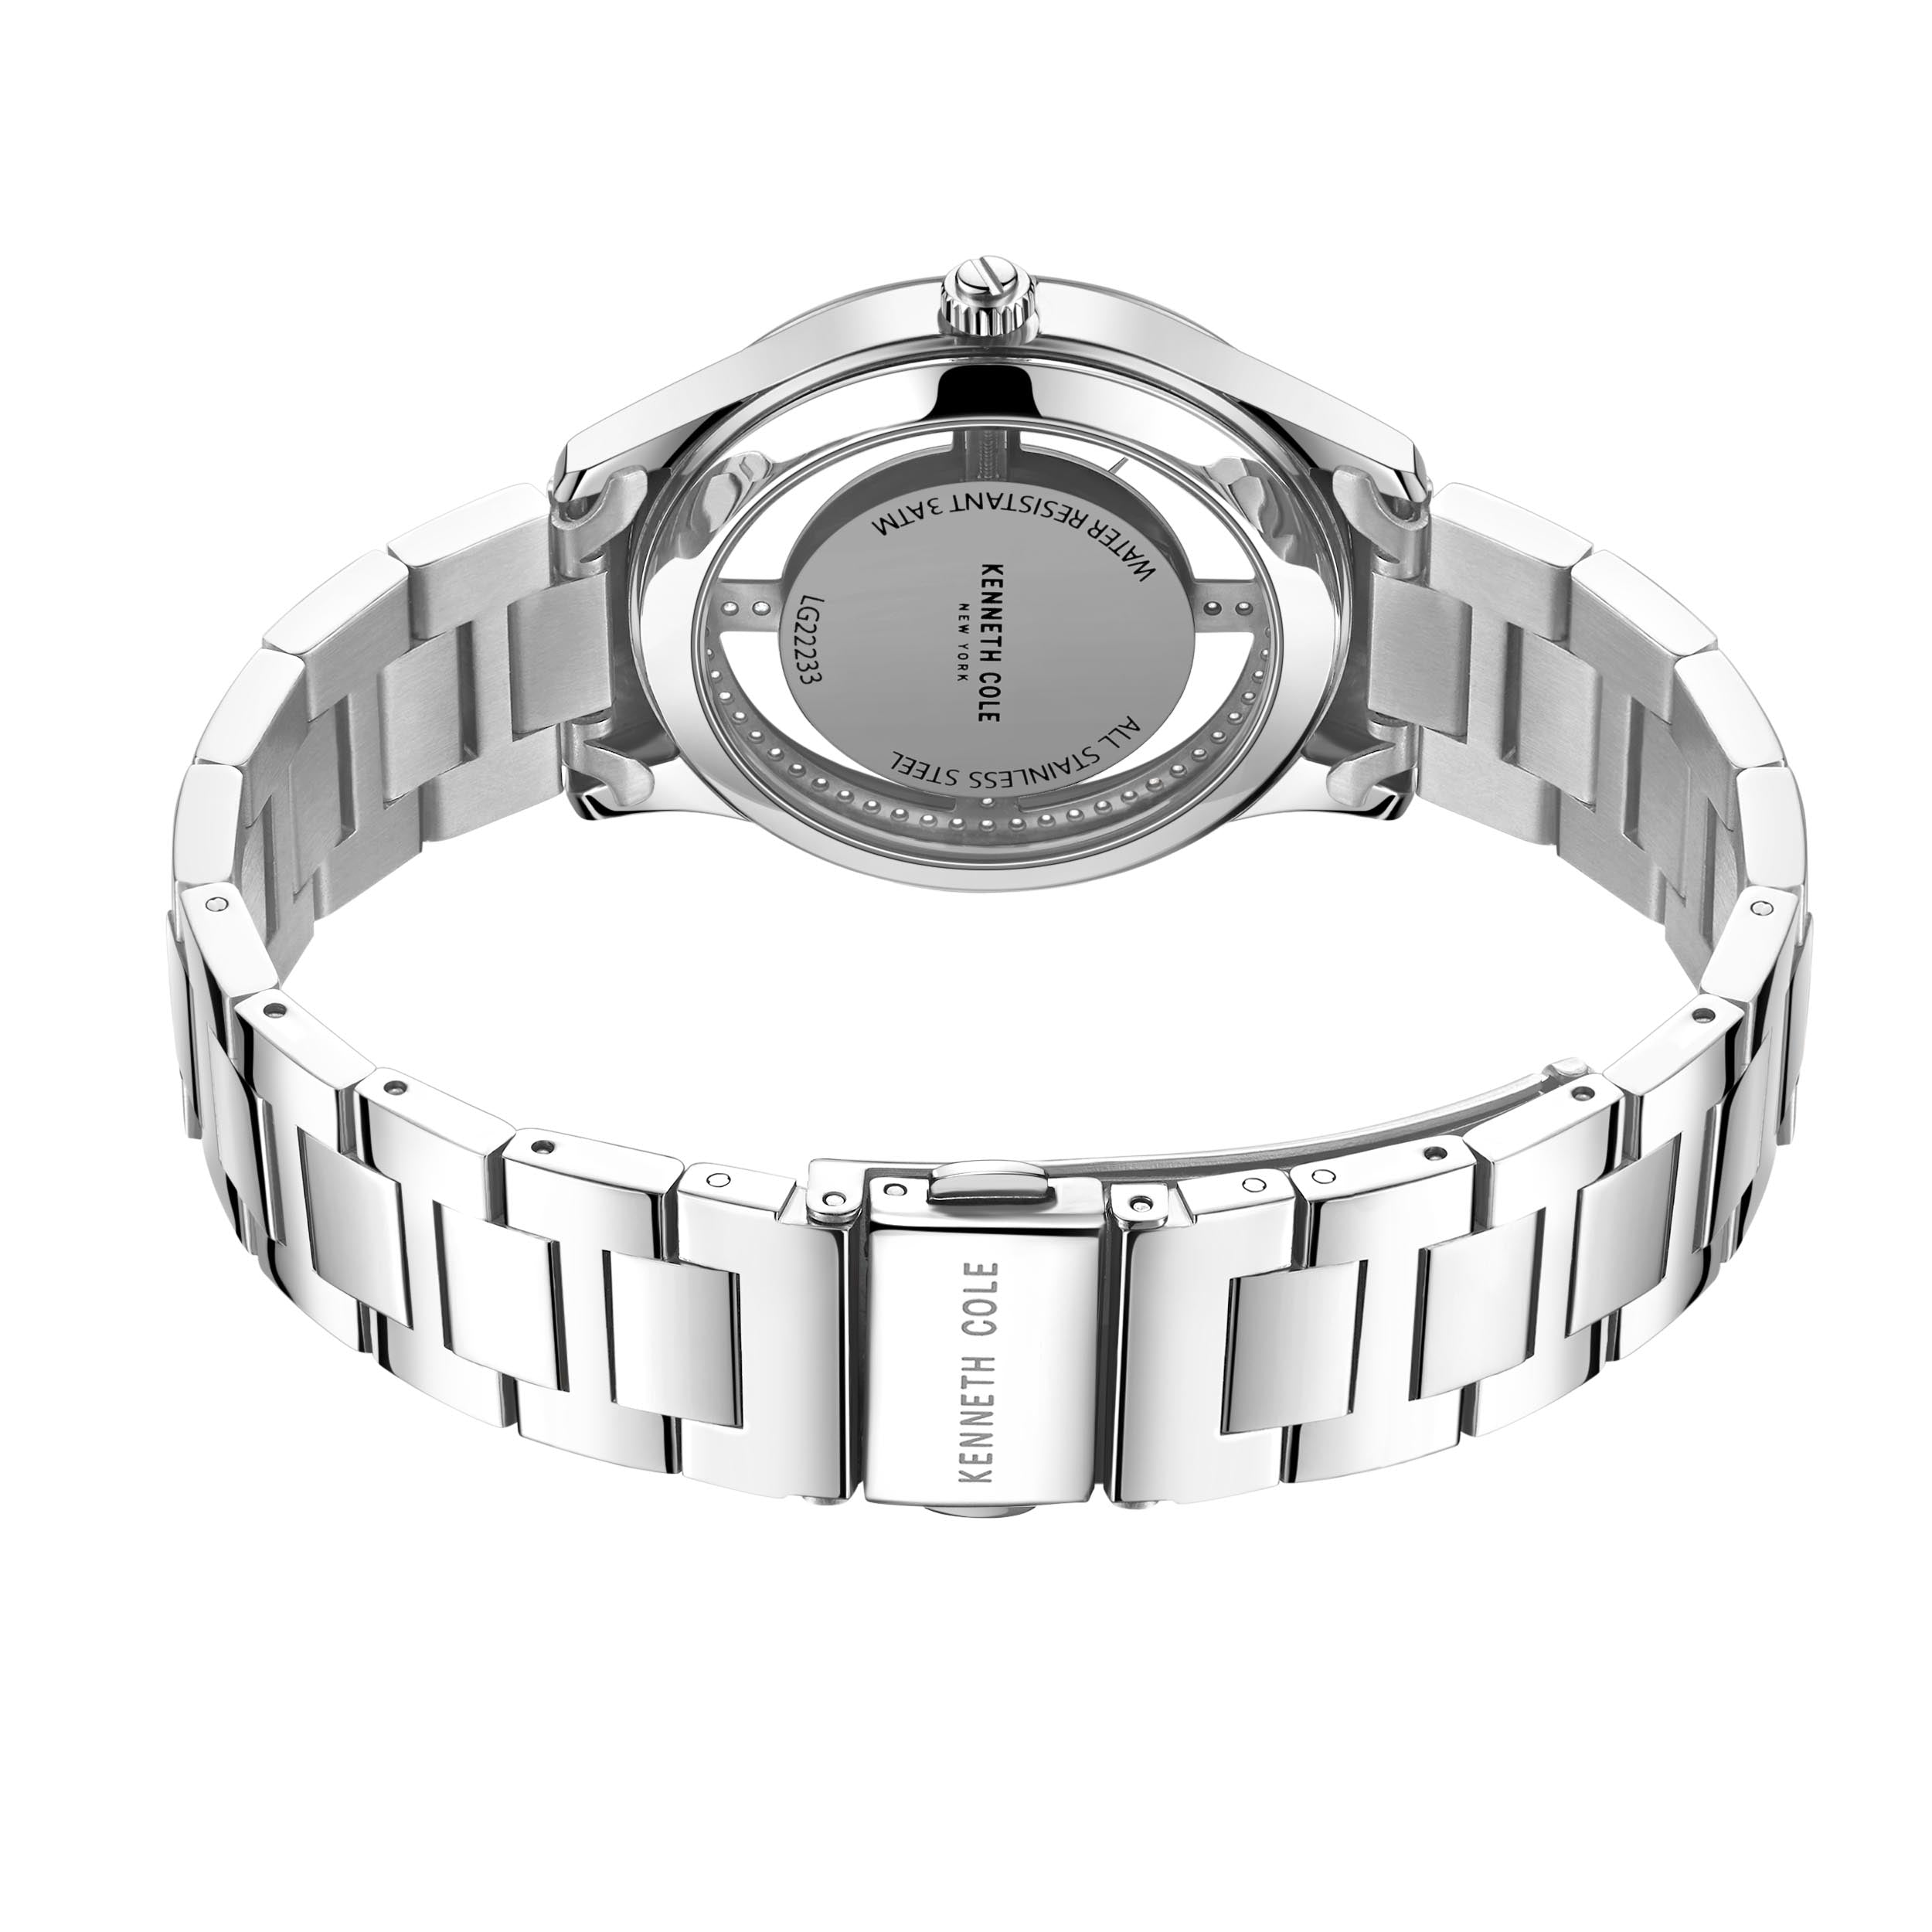 Kenneth Cole New York -KCWLG2223301- Stainless Steel Wrist Watch for Women